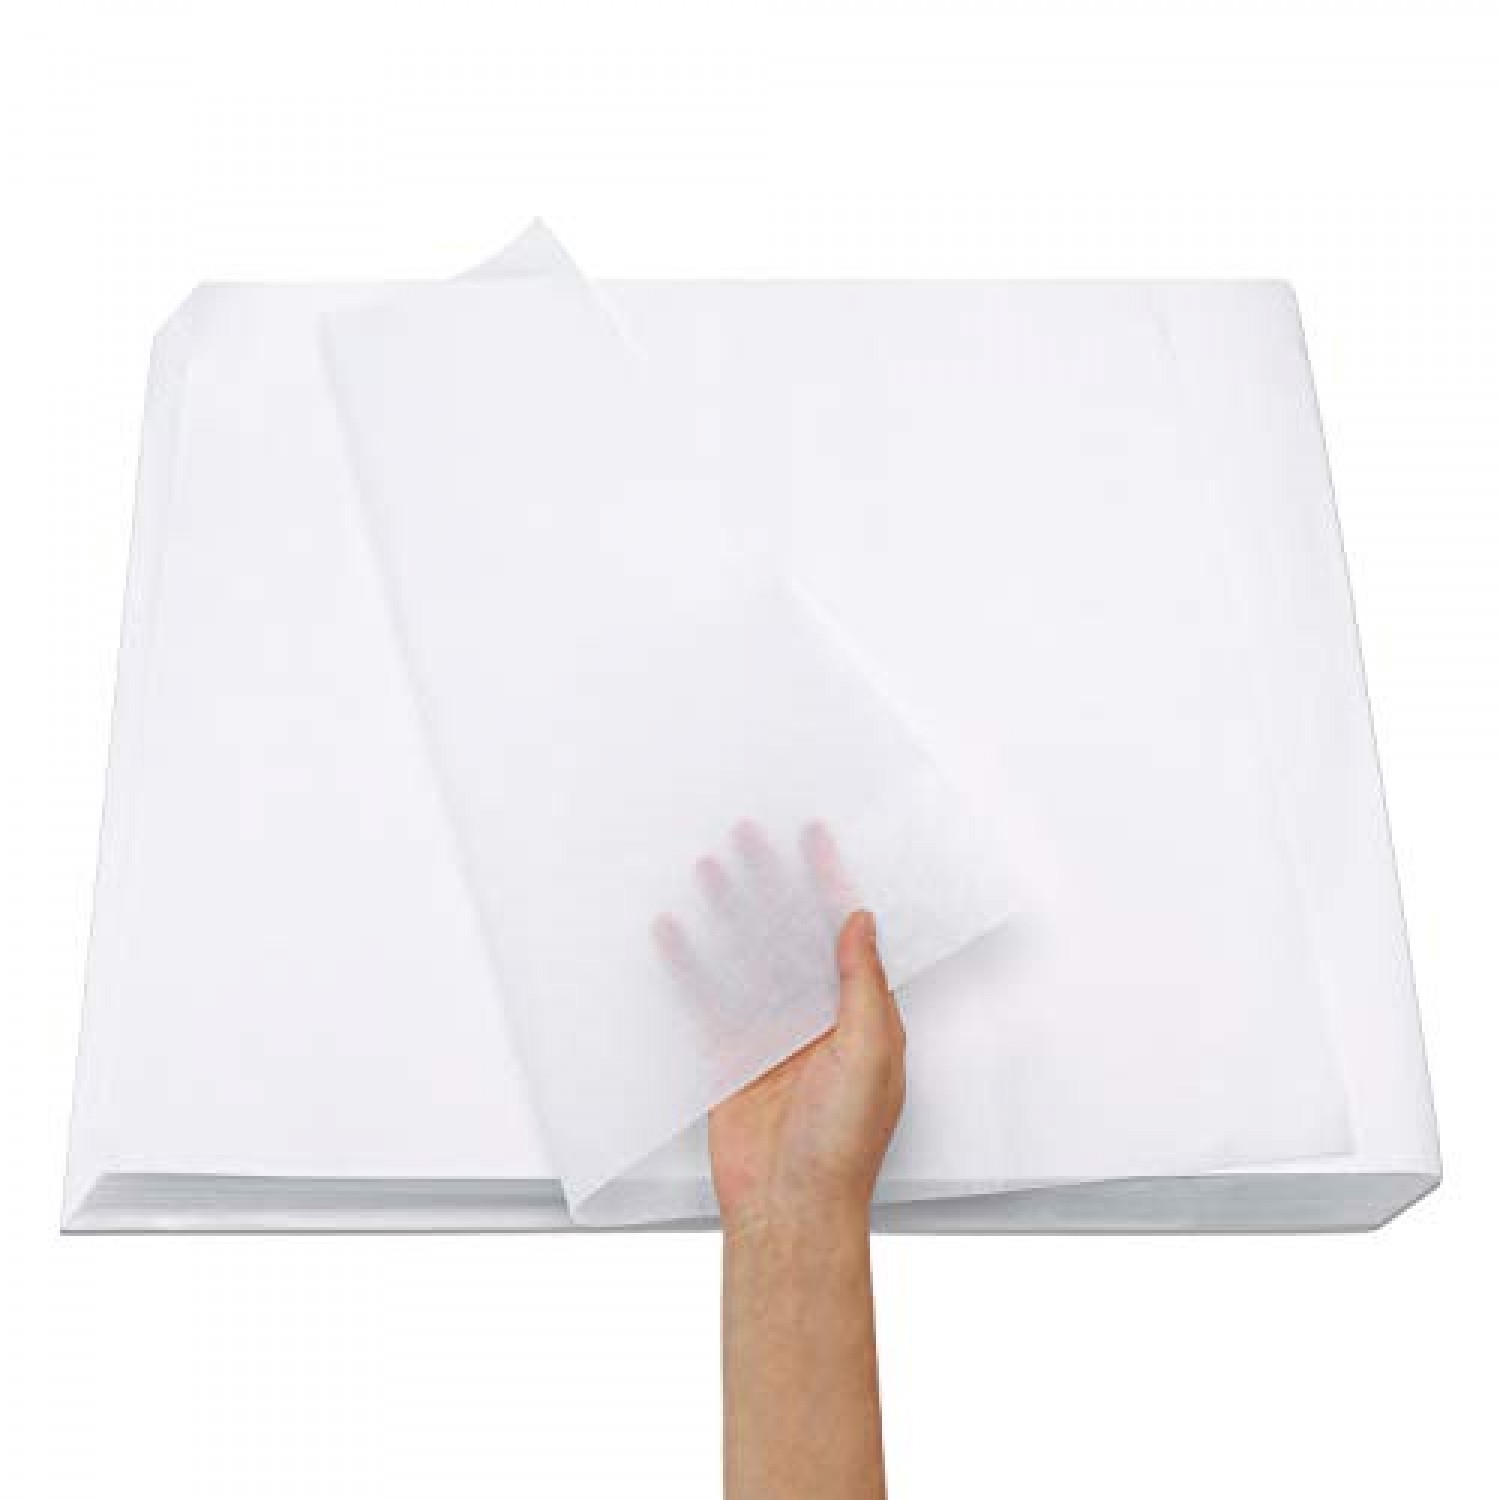 Tissue Paper Sheets - 15 x 20, Dark Green